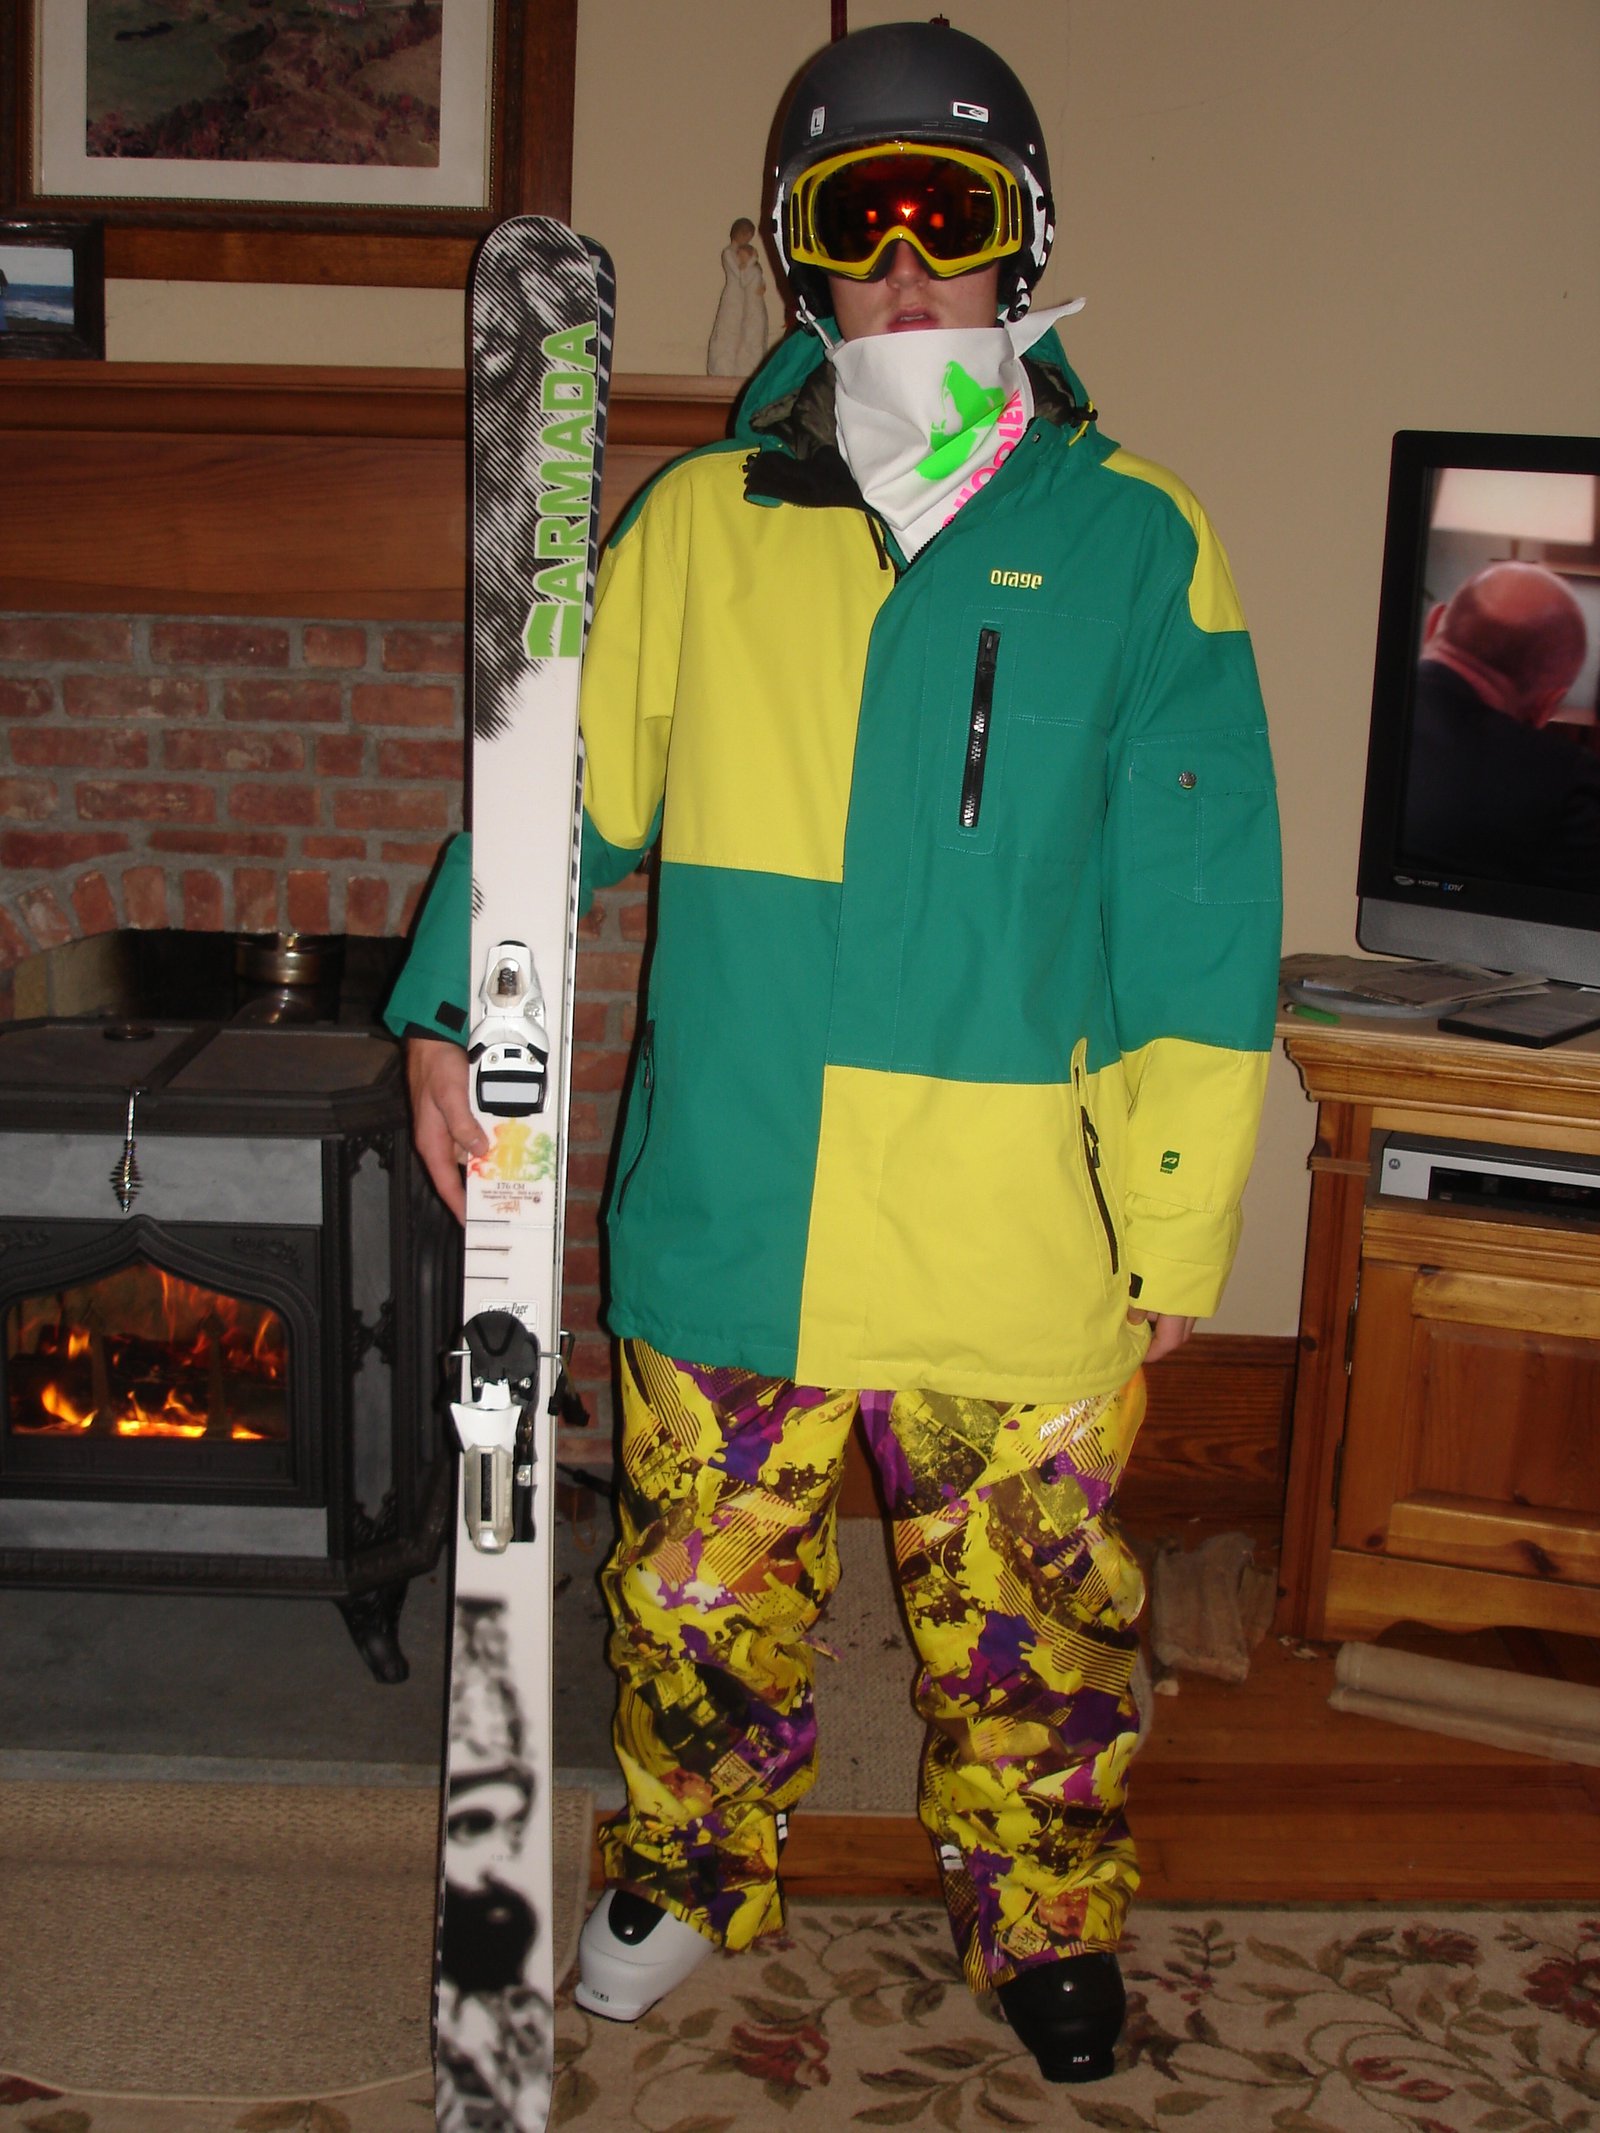 Ski gear